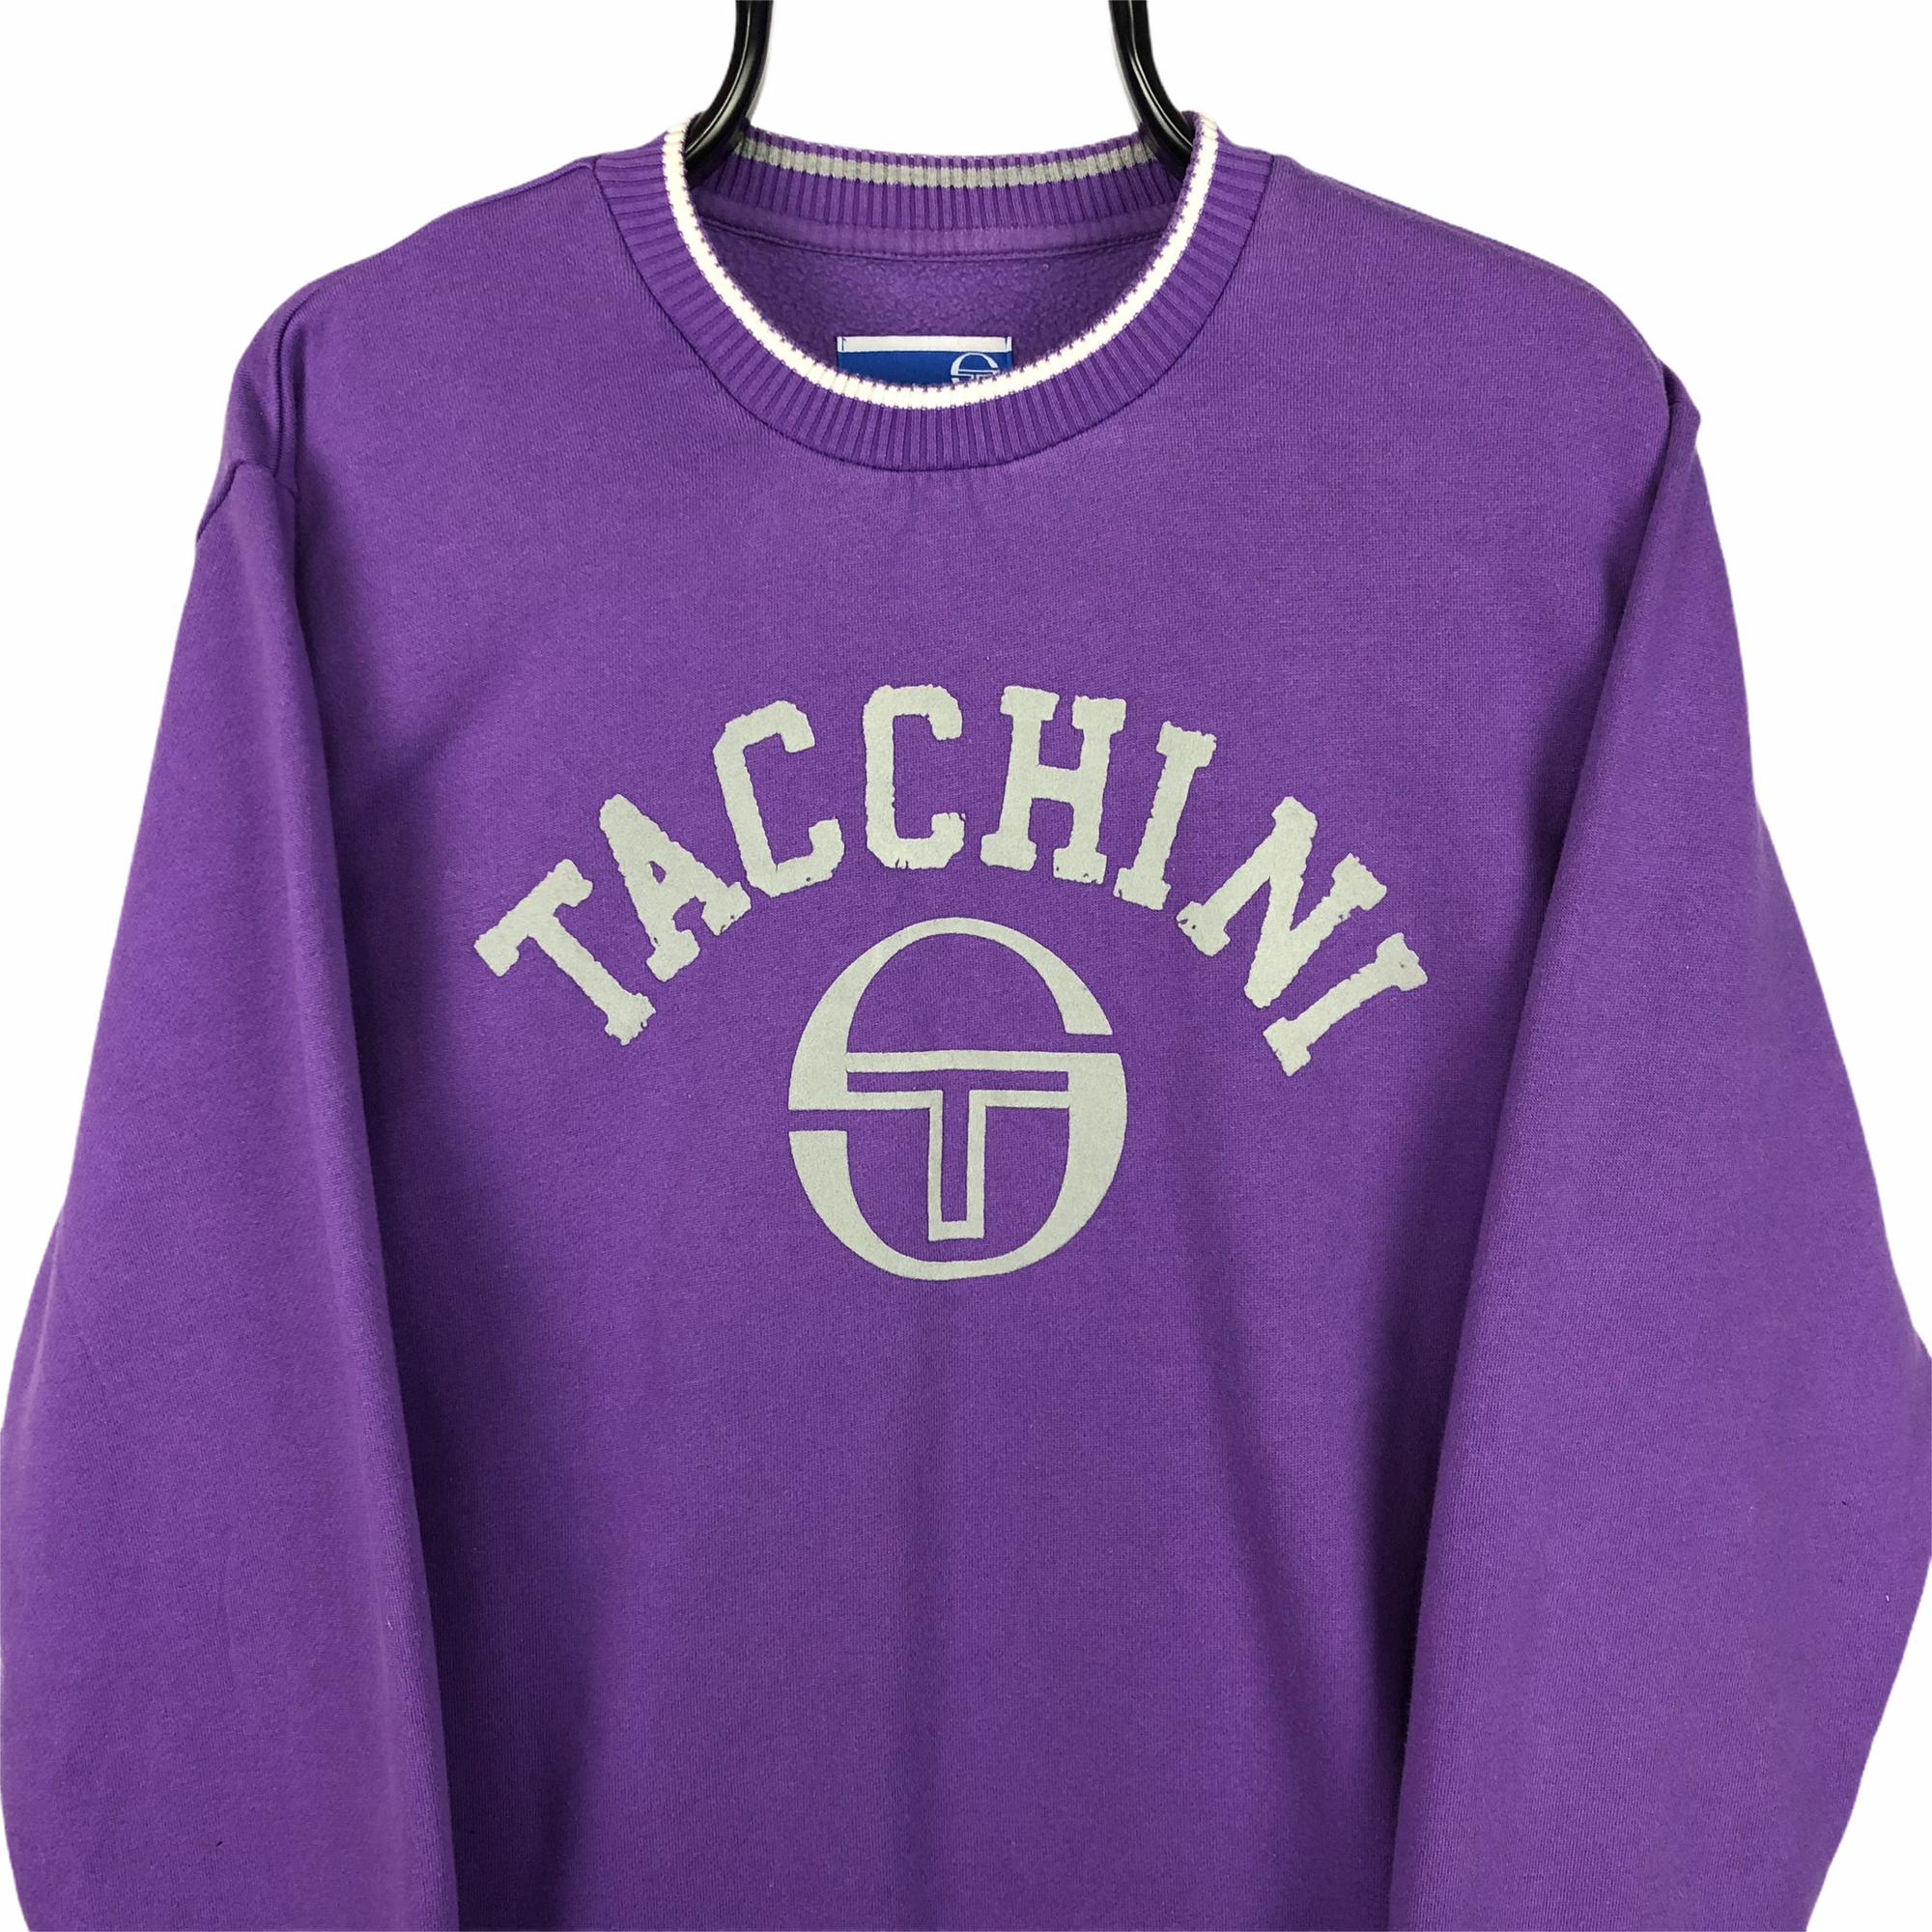 Vintage Sergio Tacchini Sweatshirt in Purple - Men's Medium/Women's Large